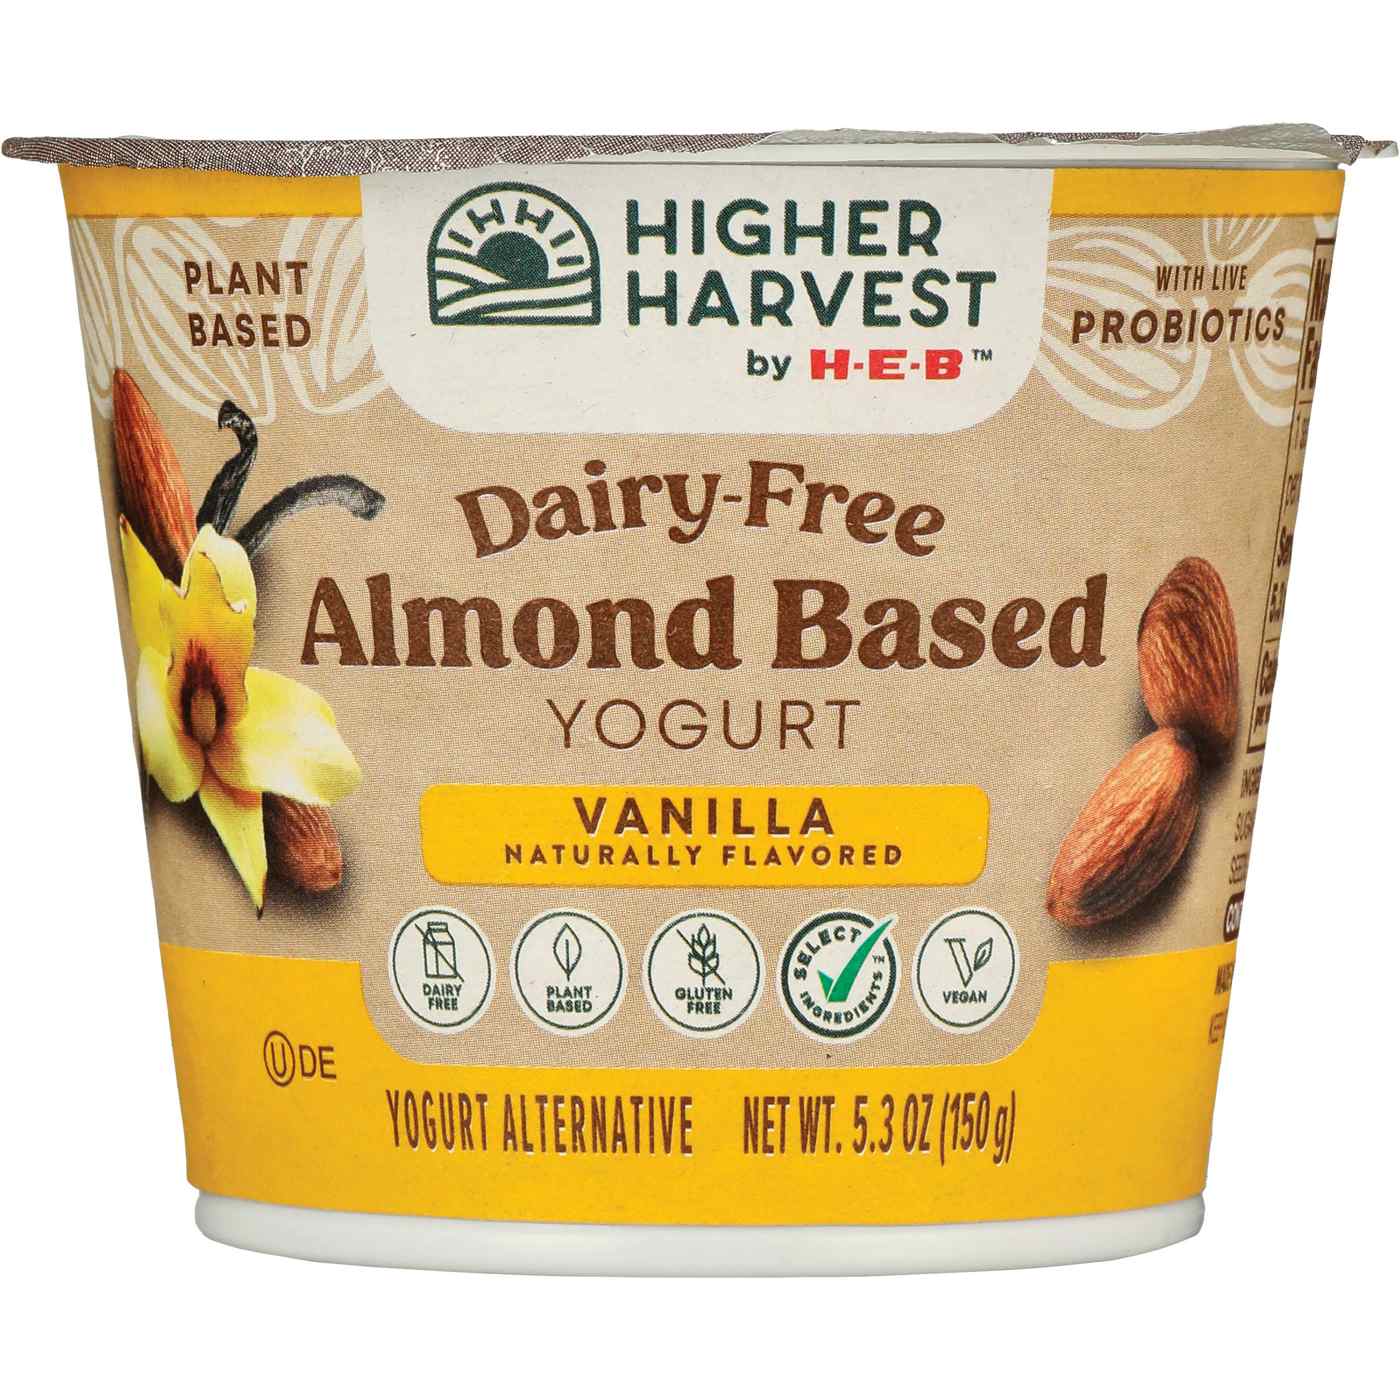 Higher Harvest by H-E-B Dairy-Free Almond-Based Yogurt – Vanilla; image 1 of 3